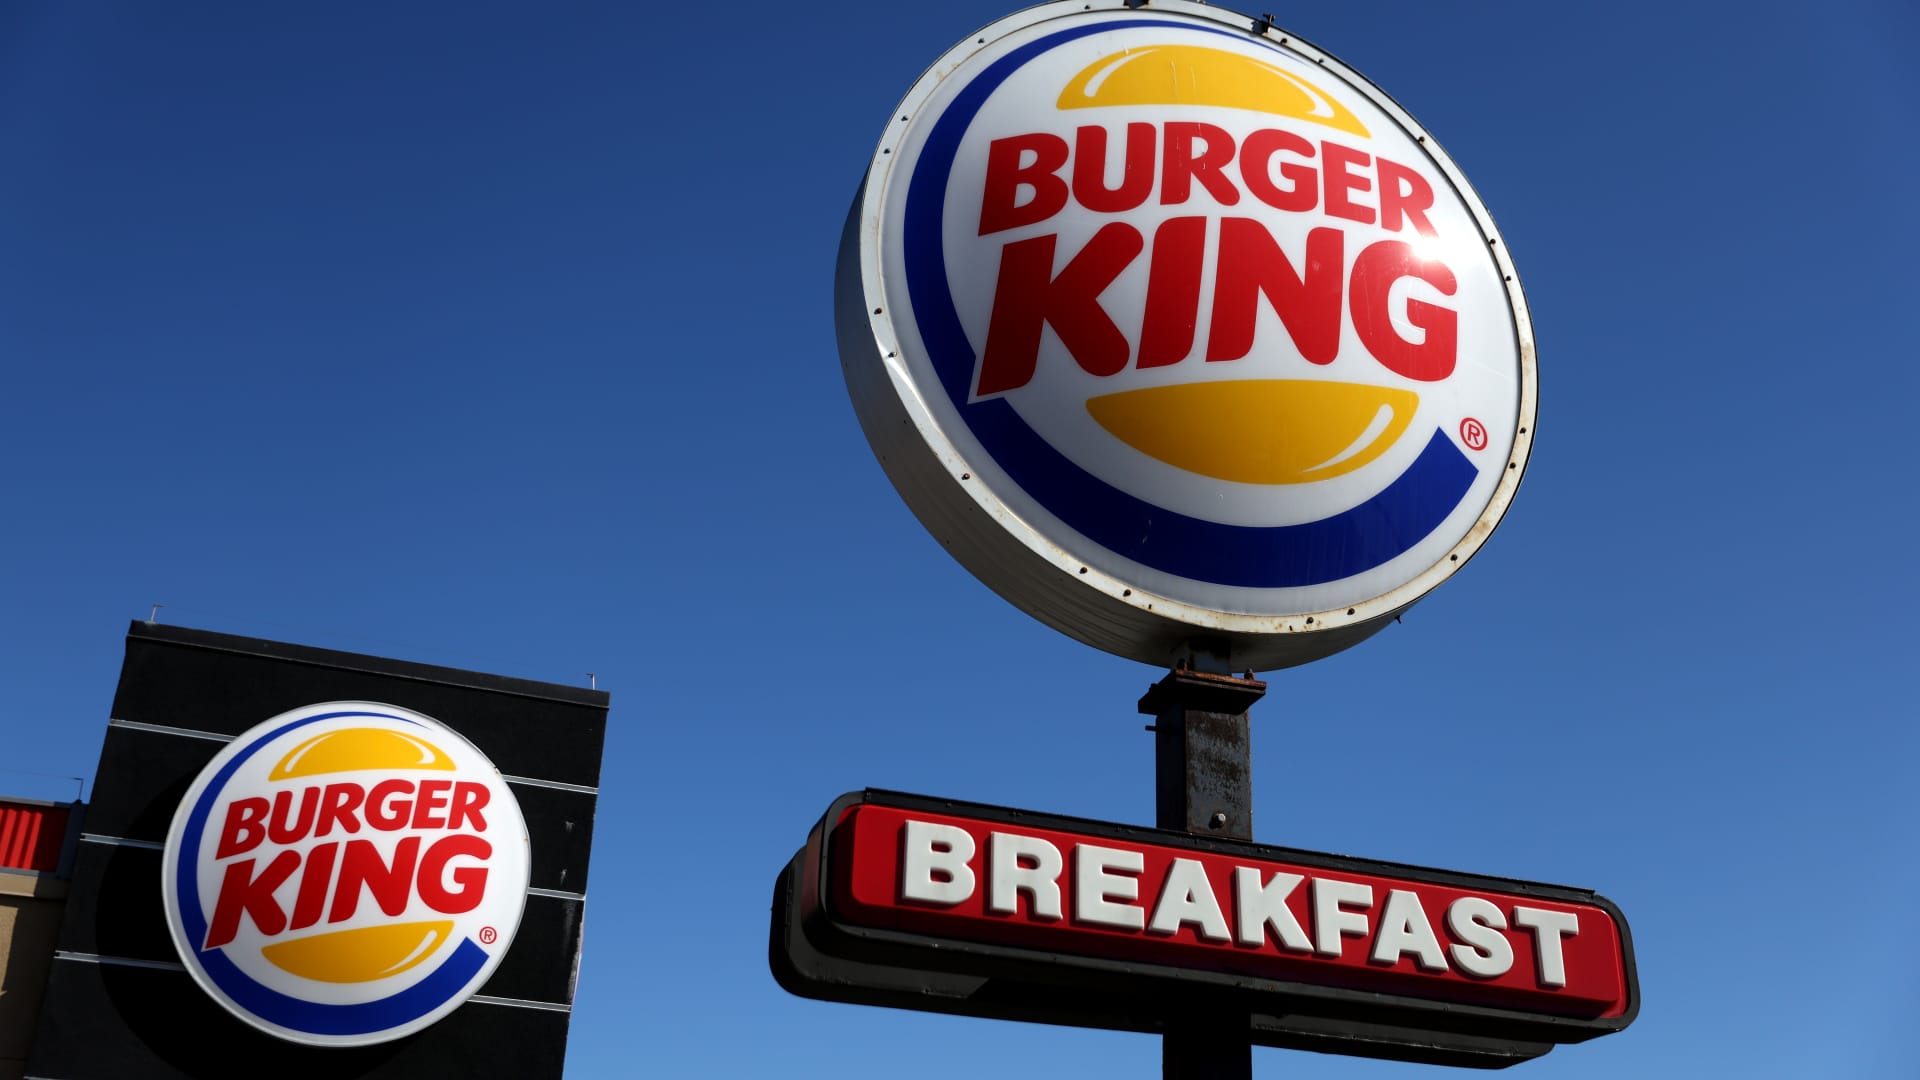 Restaurant Manufacturers’ earnings high estimates as gross sales rise at Burger King, Tim Hortons